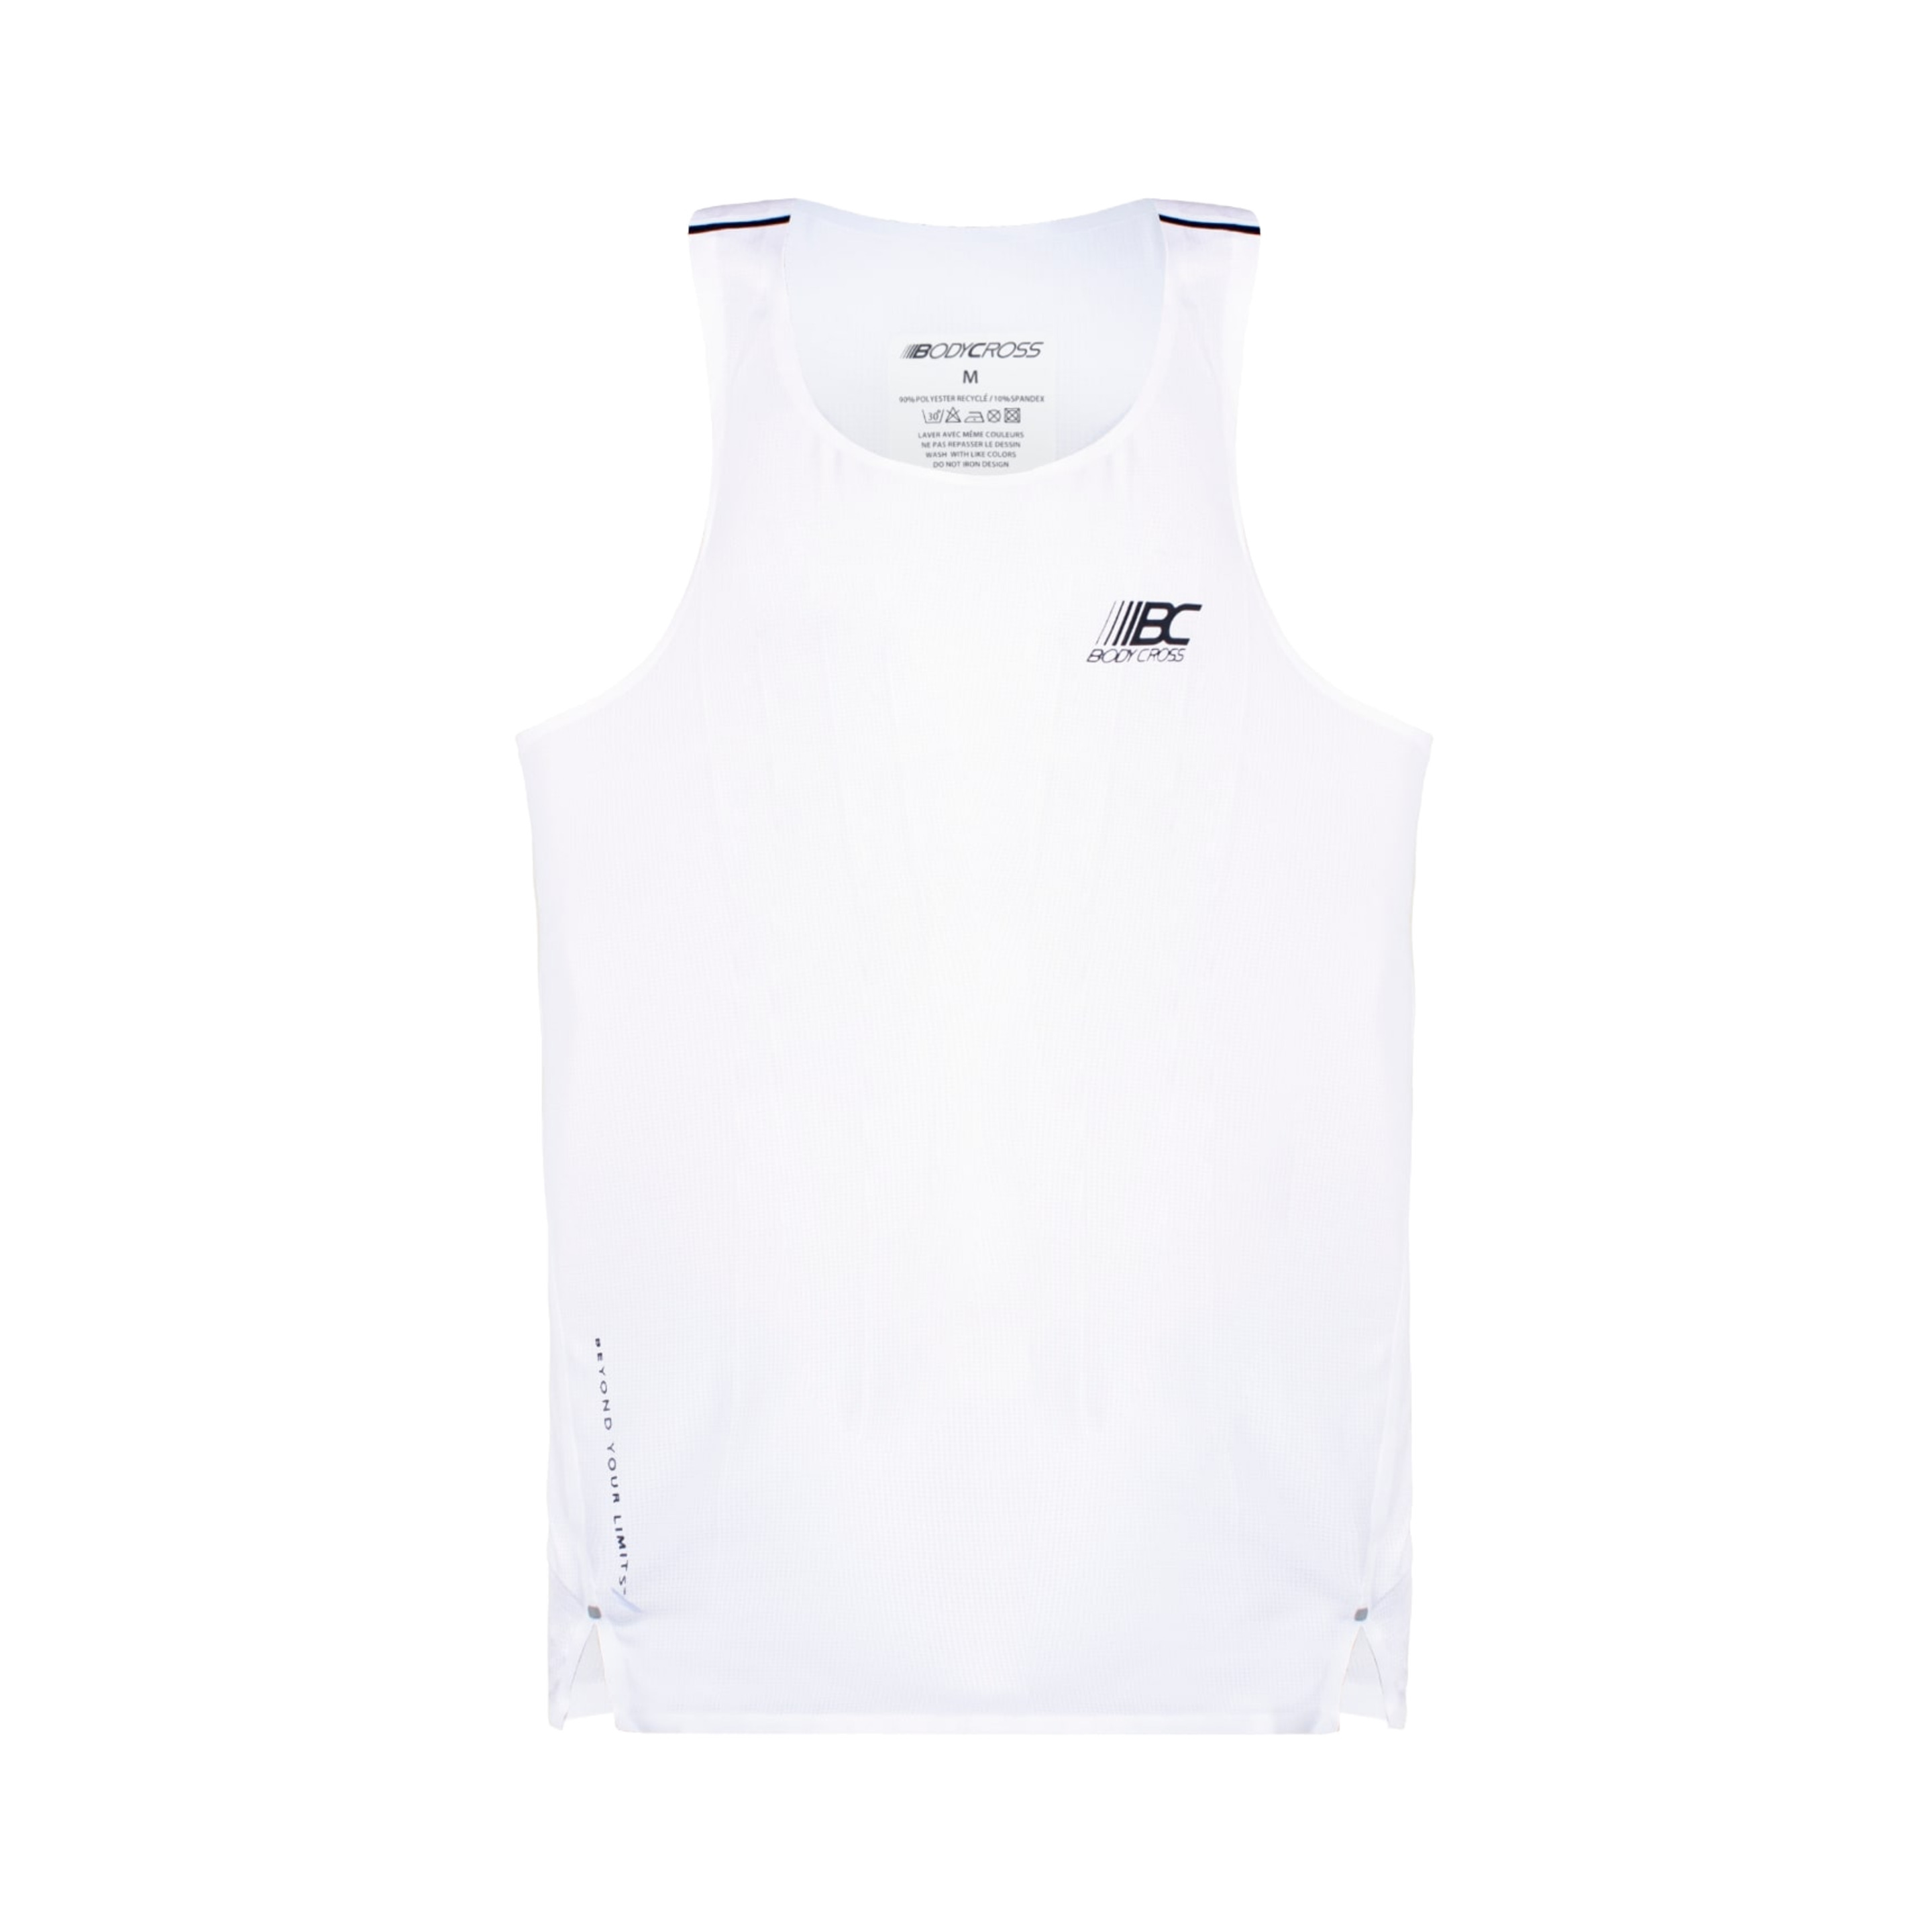 Camiseta Sin Mangas Bodycross Brice - Blanco - Brice-white/black-s  MKP